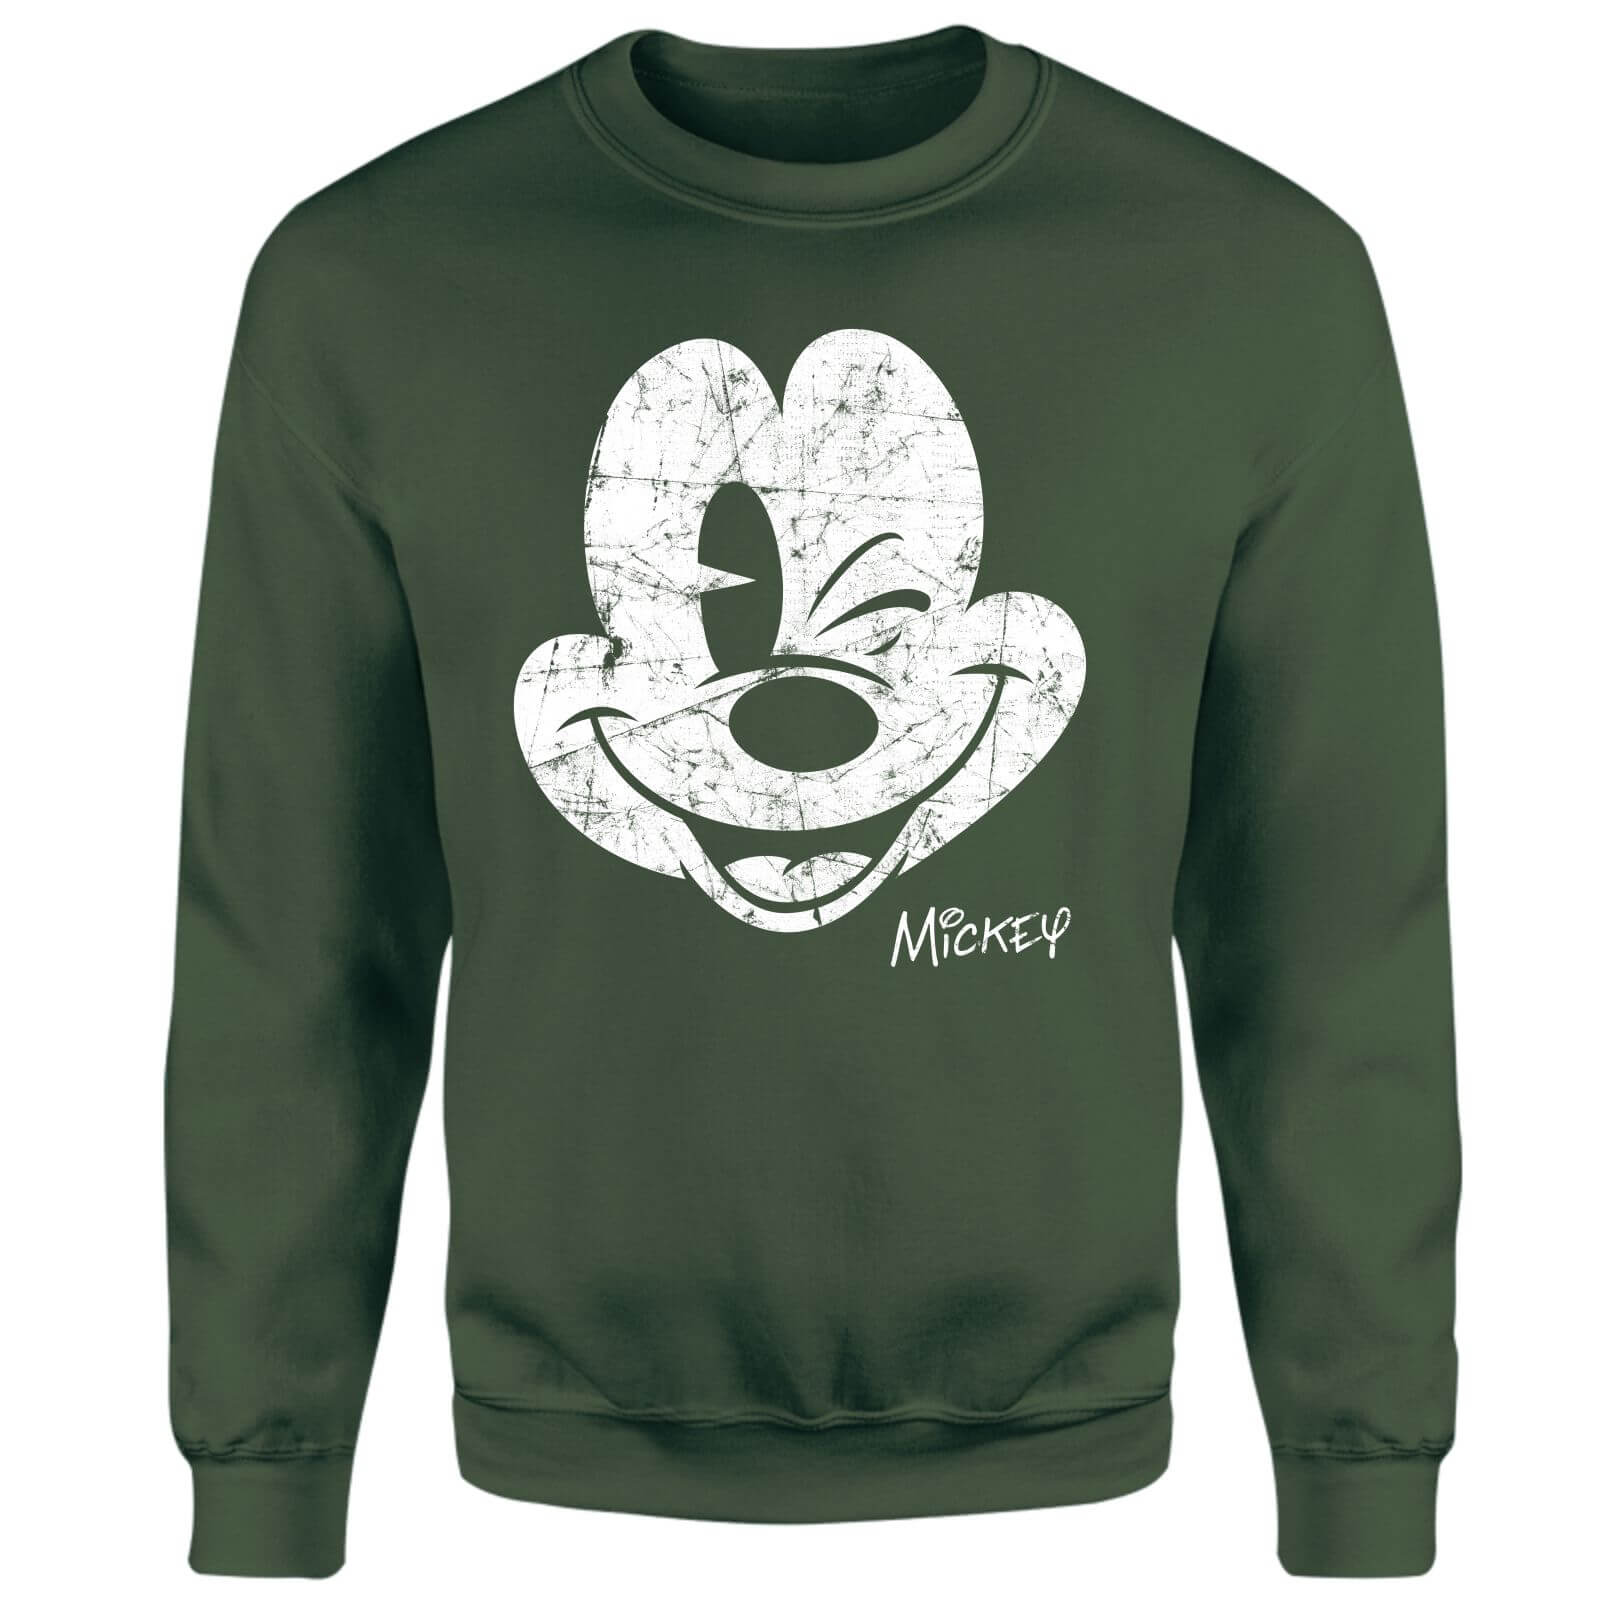 Mickey Mouse Worn Face Sweatshirt - Green - XL - Green